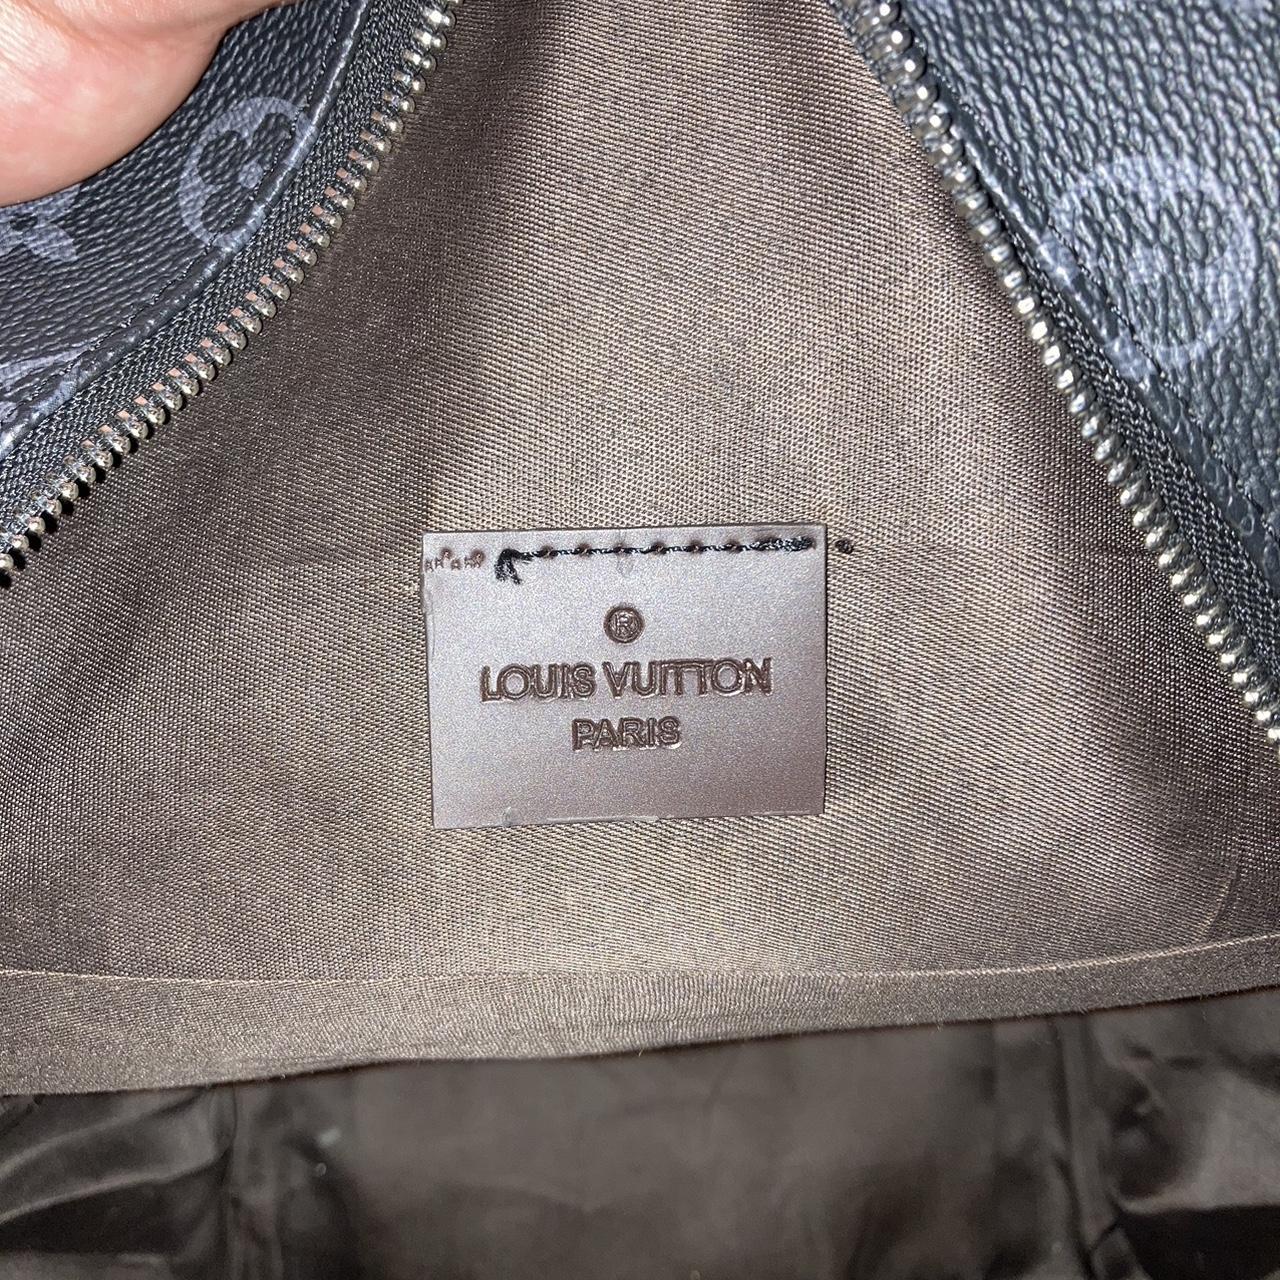 LV bag brand new used once - Depop